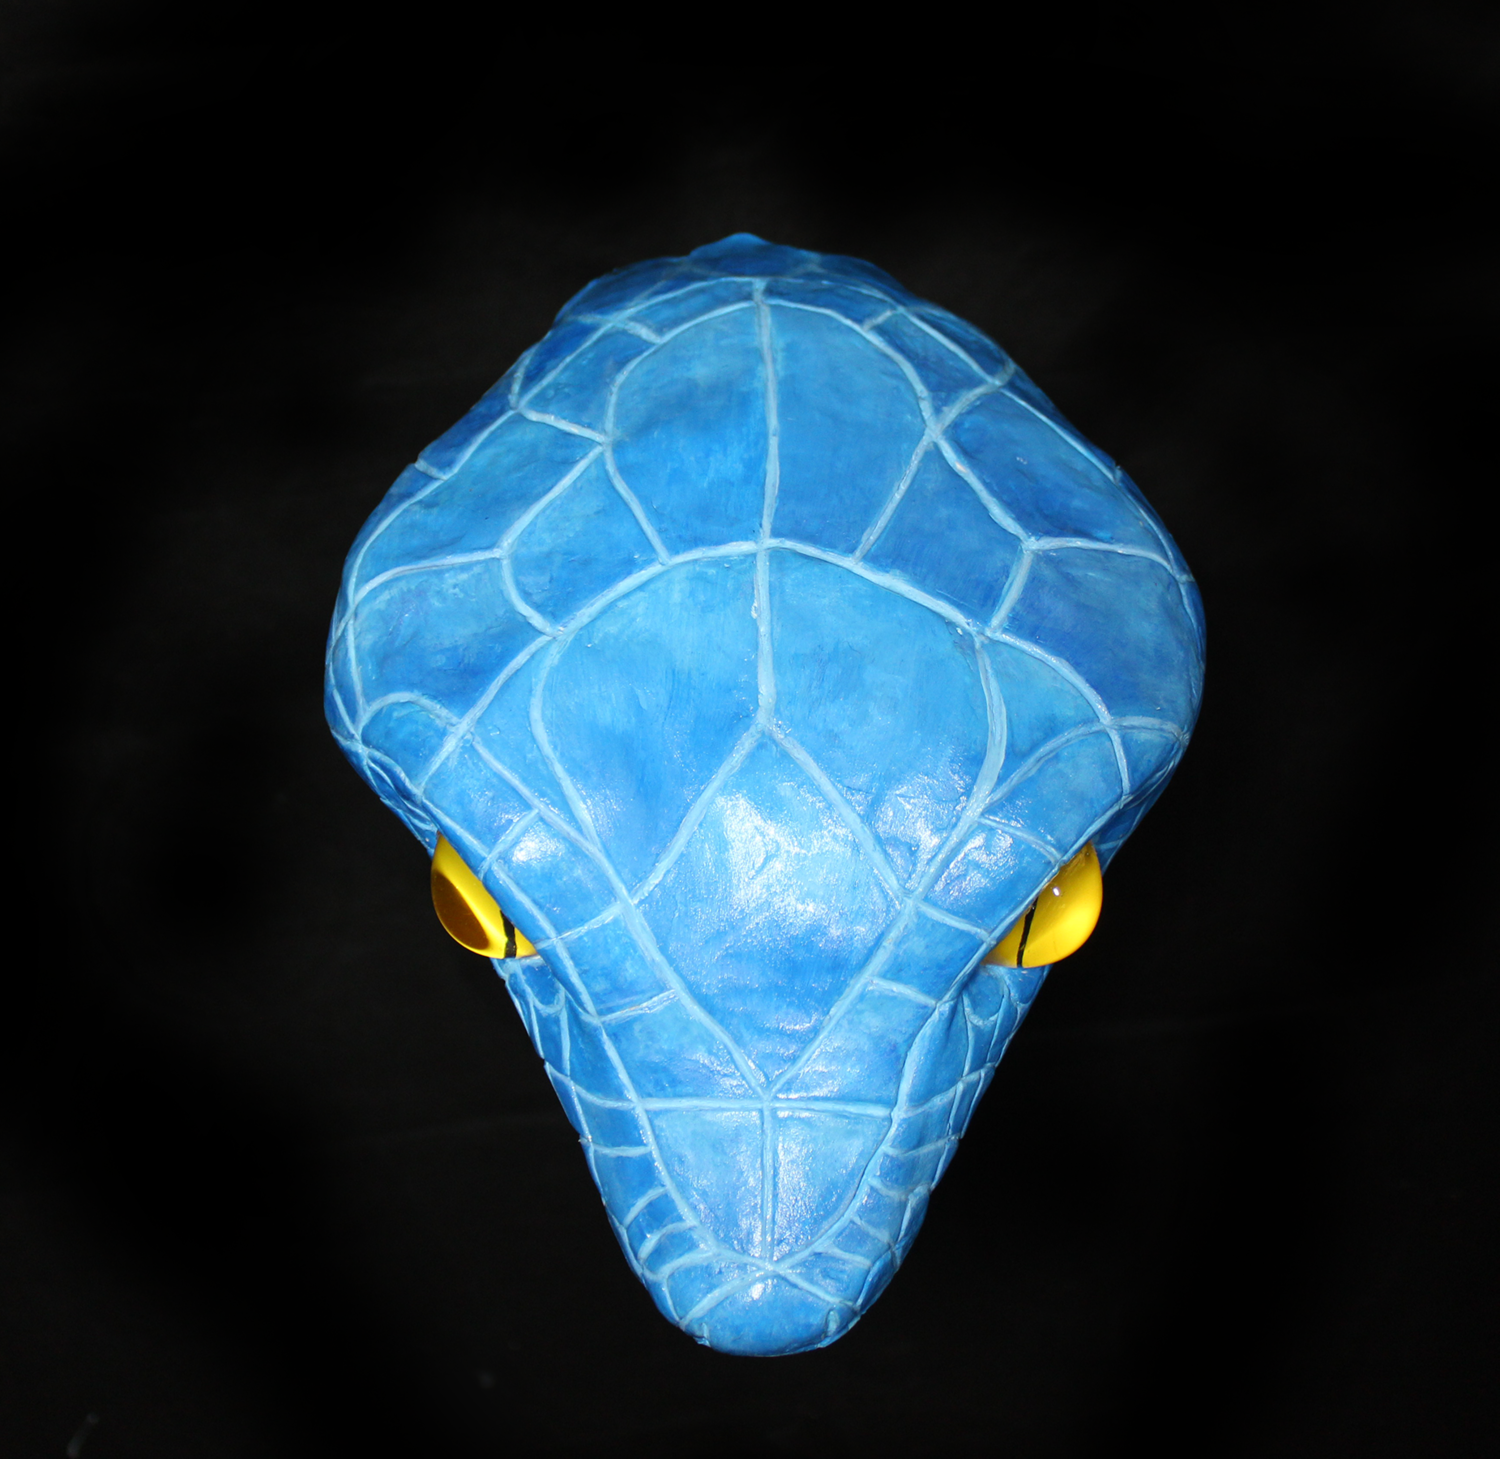 Soleasy Men's Peculiar Cool Gadgets Interesting Amazing Snake Head Design Blue LED